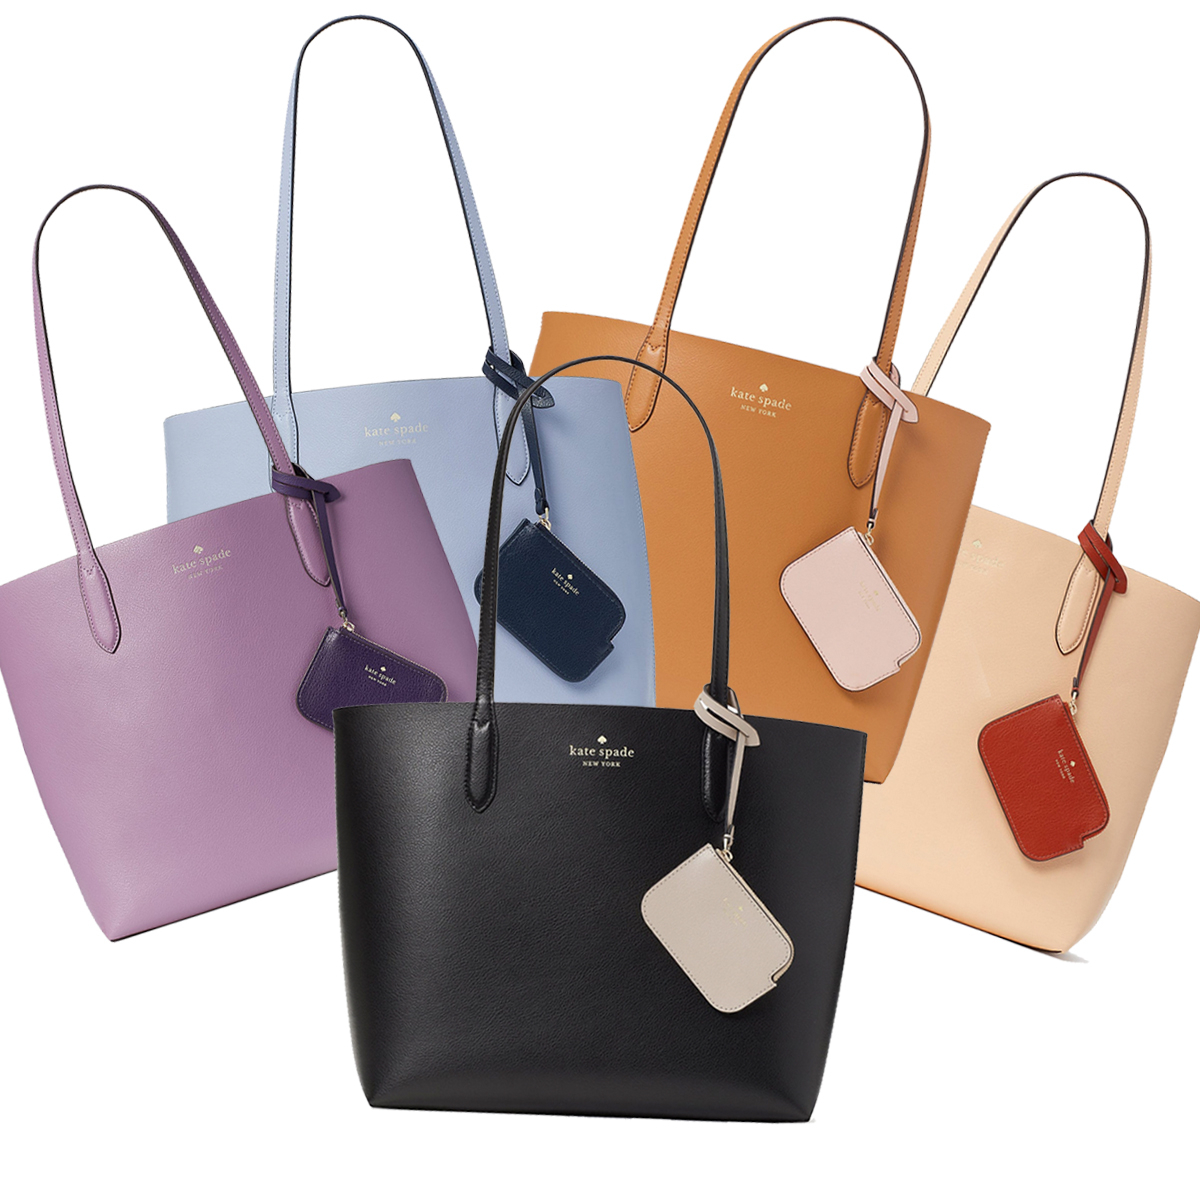 Do these Kate Spade bag scream too much LV neverfull copy to you? :  r/handbags